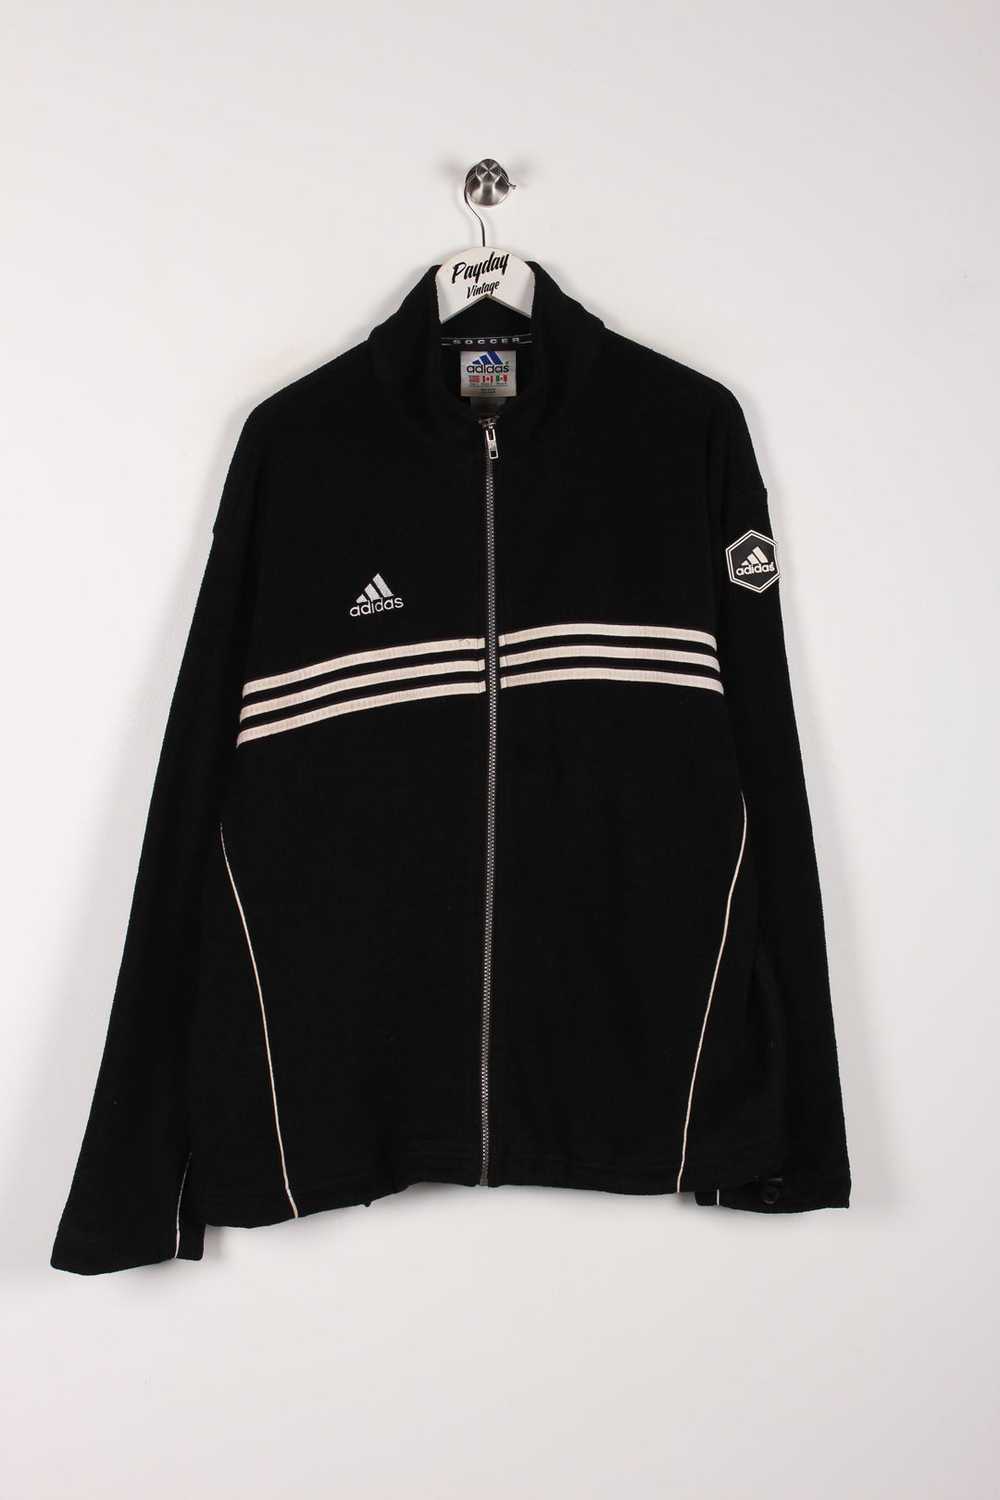 90's Adidas Fleece Black Large - image 1